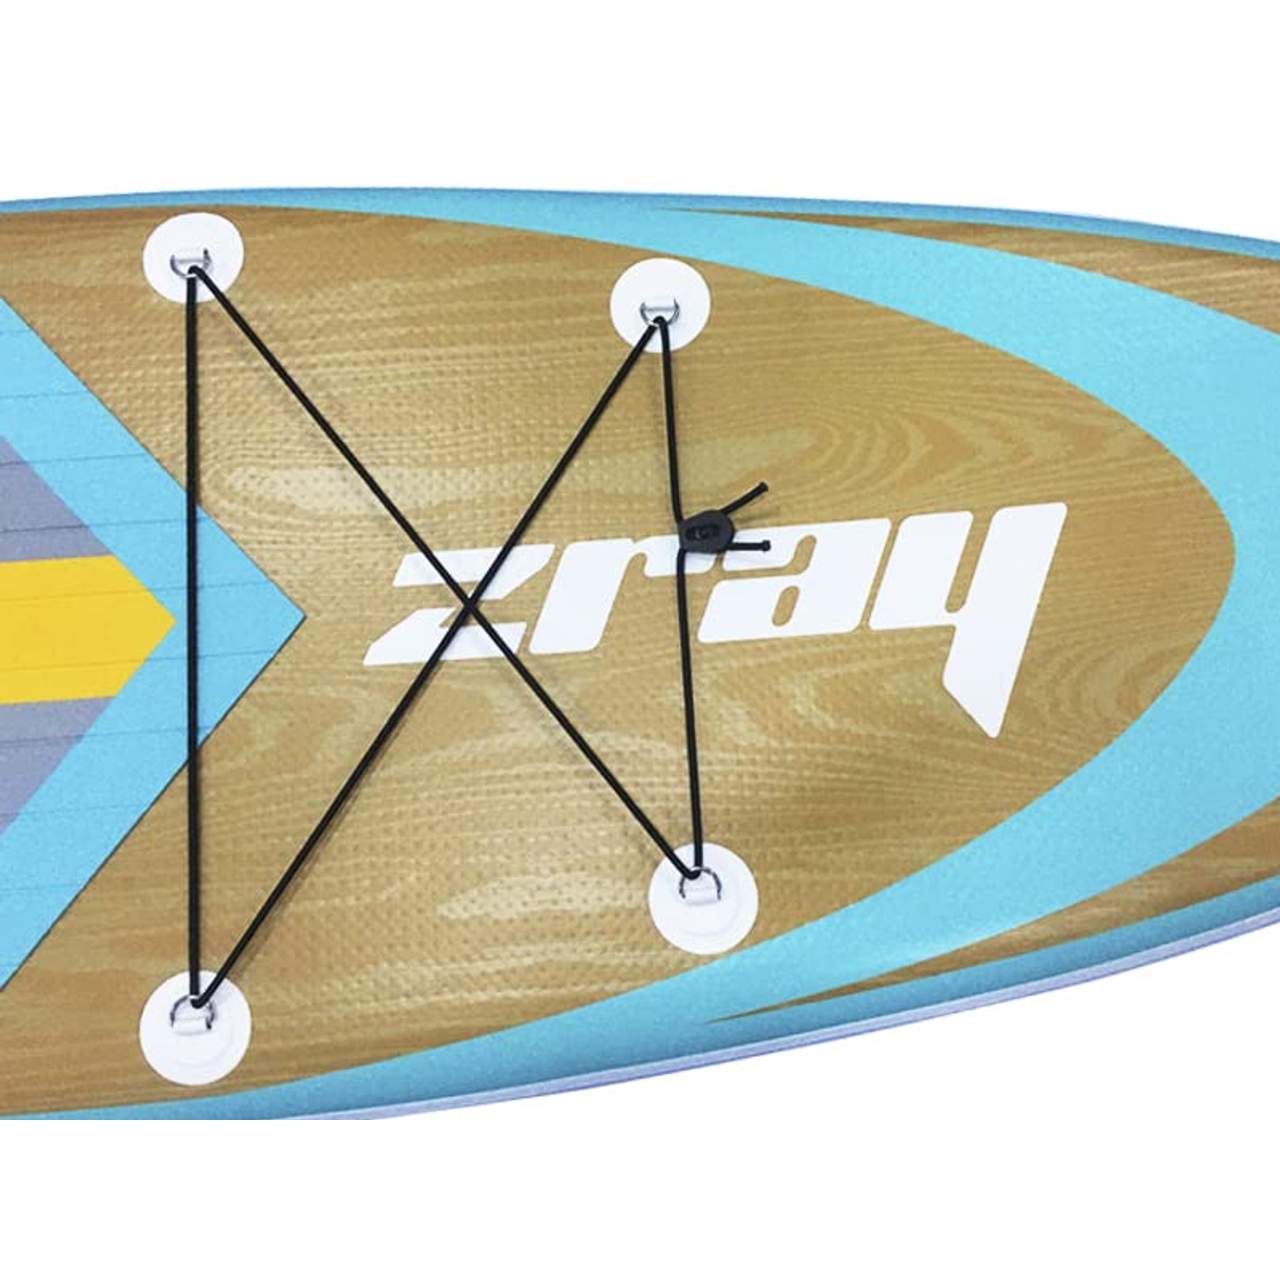 Zray Grain 10'8" Sup-Board